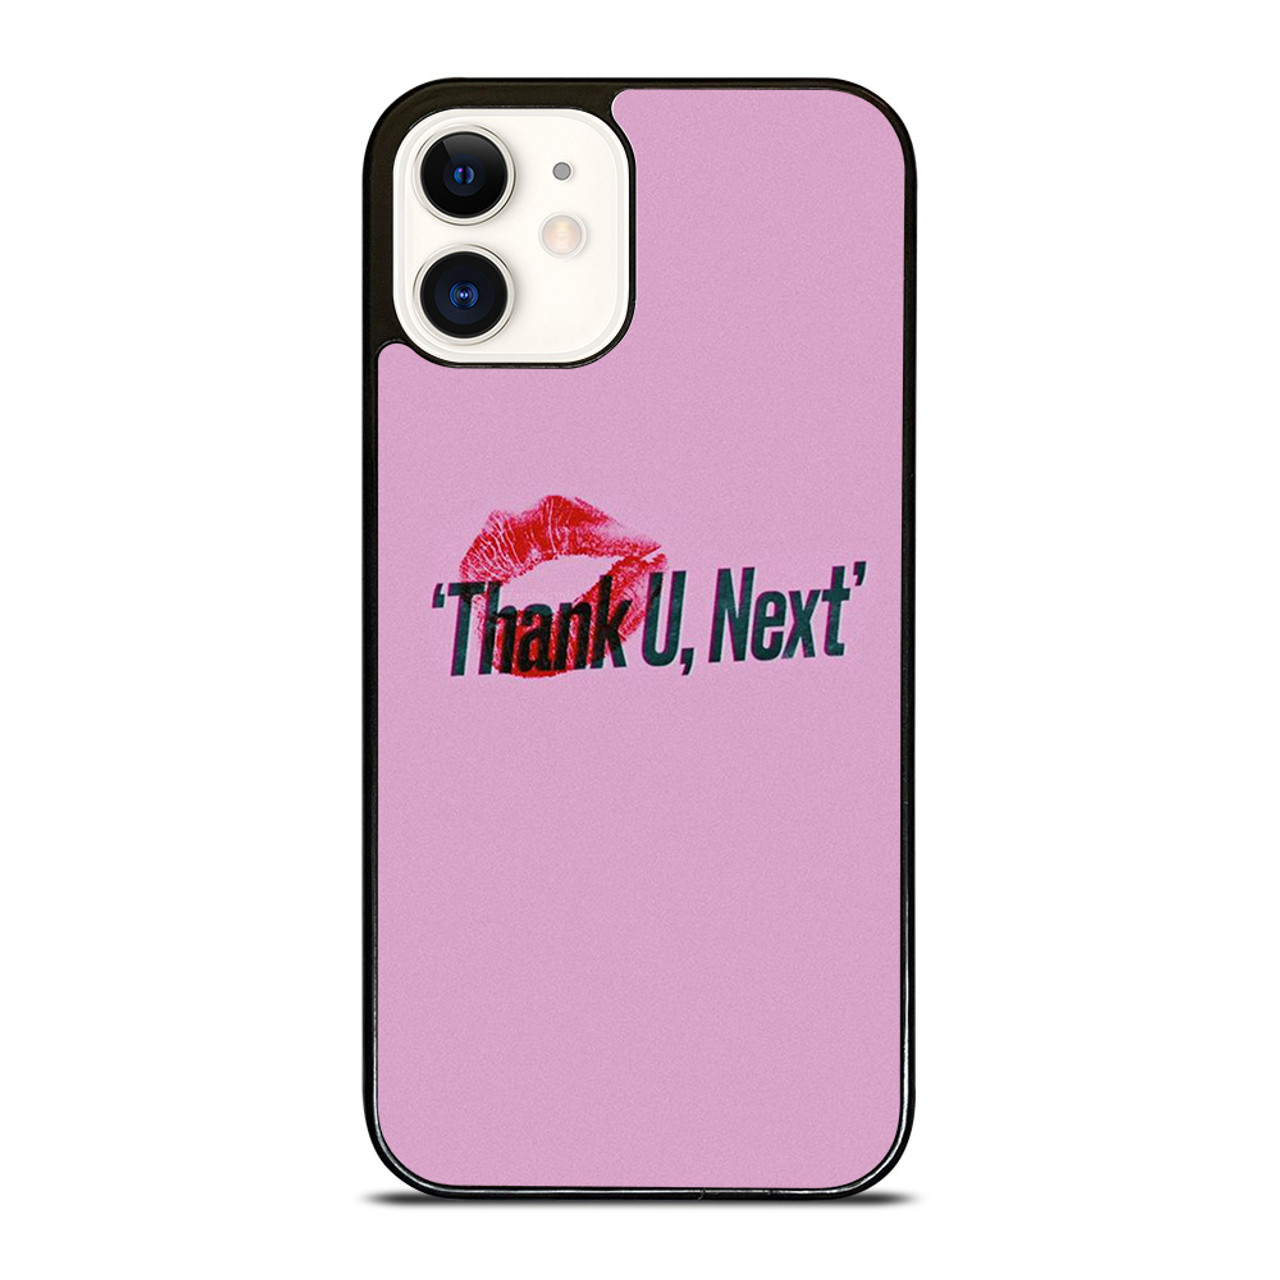 ARIANA GRANDE THANK YOU NEXT iPhone 12 Mini Case Cover